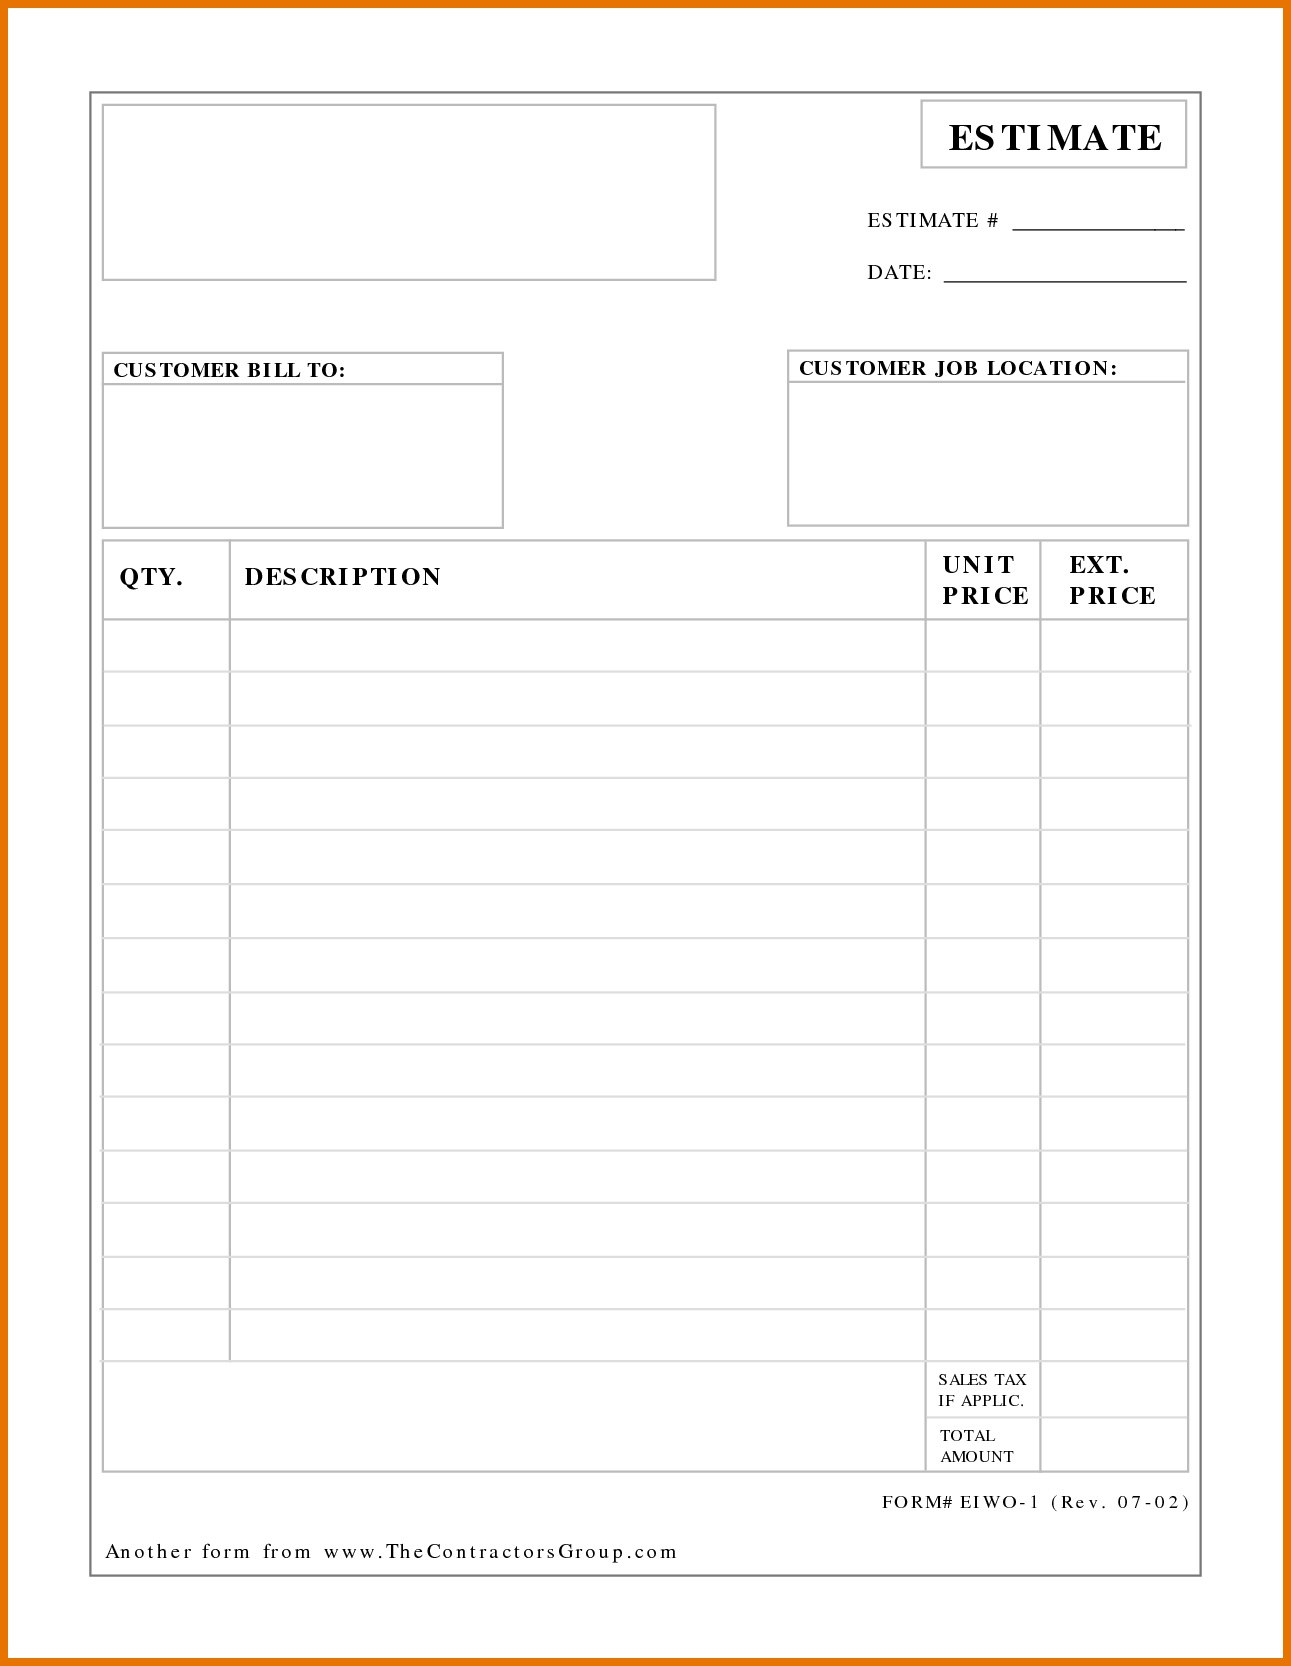 printable-construction-estimate-form-printable-forms-free-online